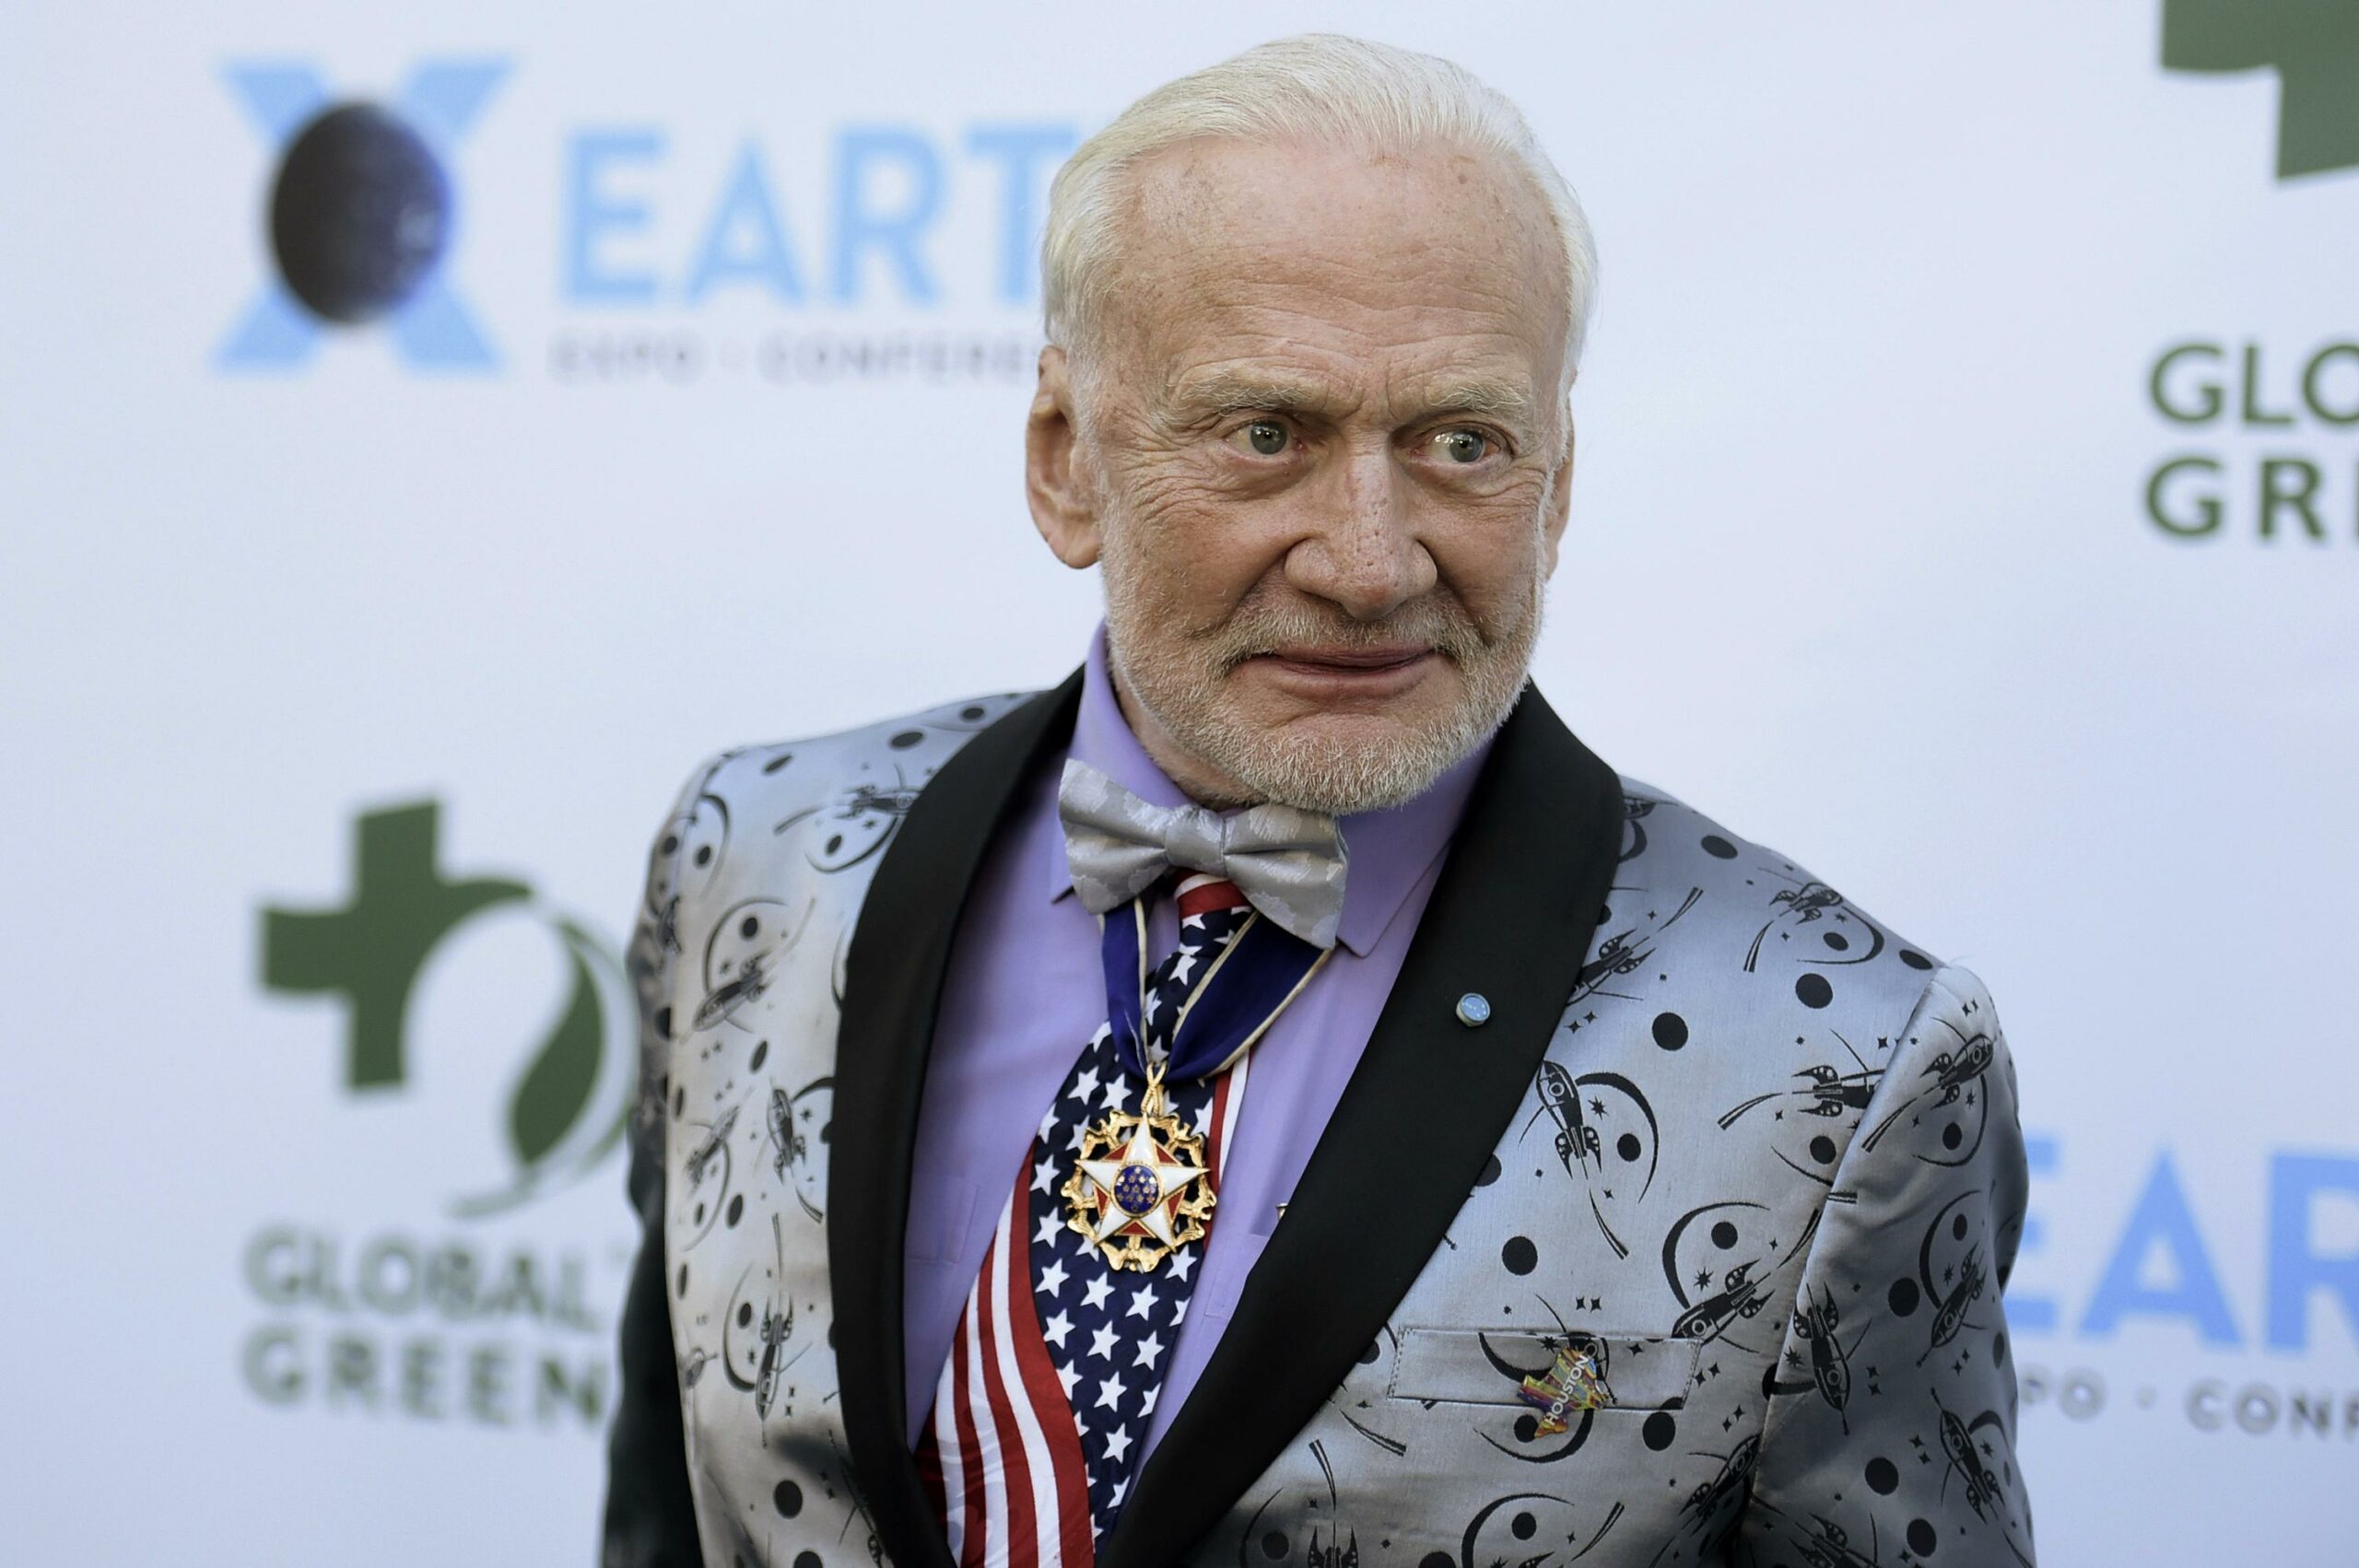 Astronaut Buzz Aldrin marries longtime love on 93rd birthday